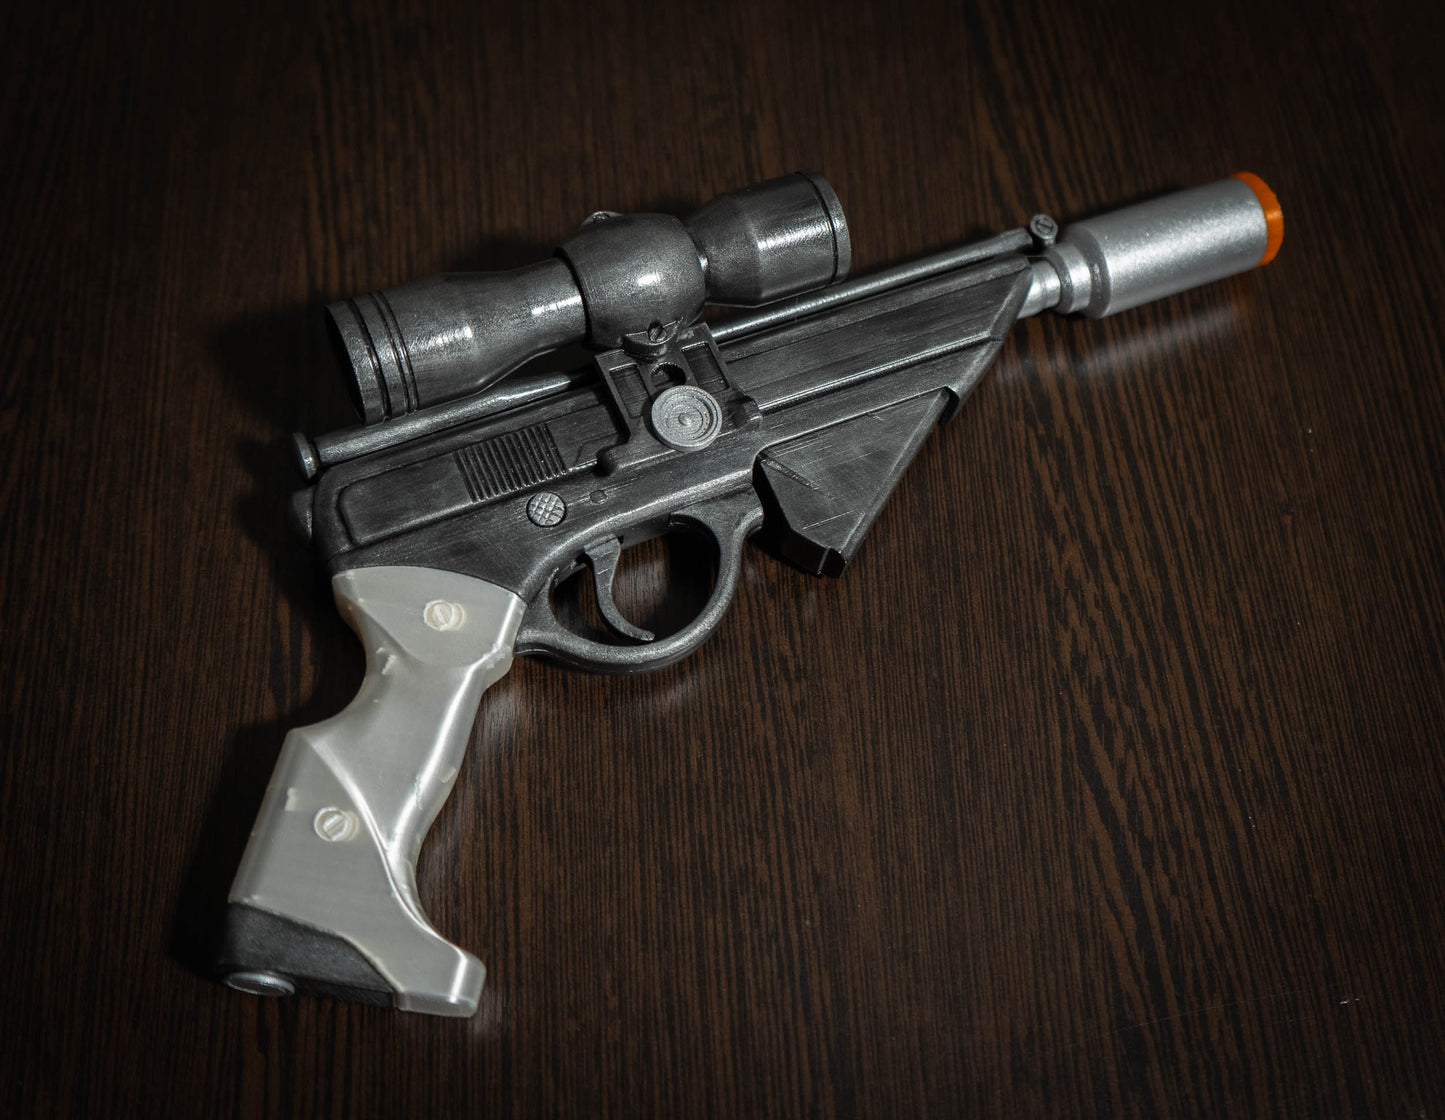 X-8 Night Sniper blaster pistol | Lando Calrissian Star Wars Replica gun | Star Wars Props | Star Wars Cosplay